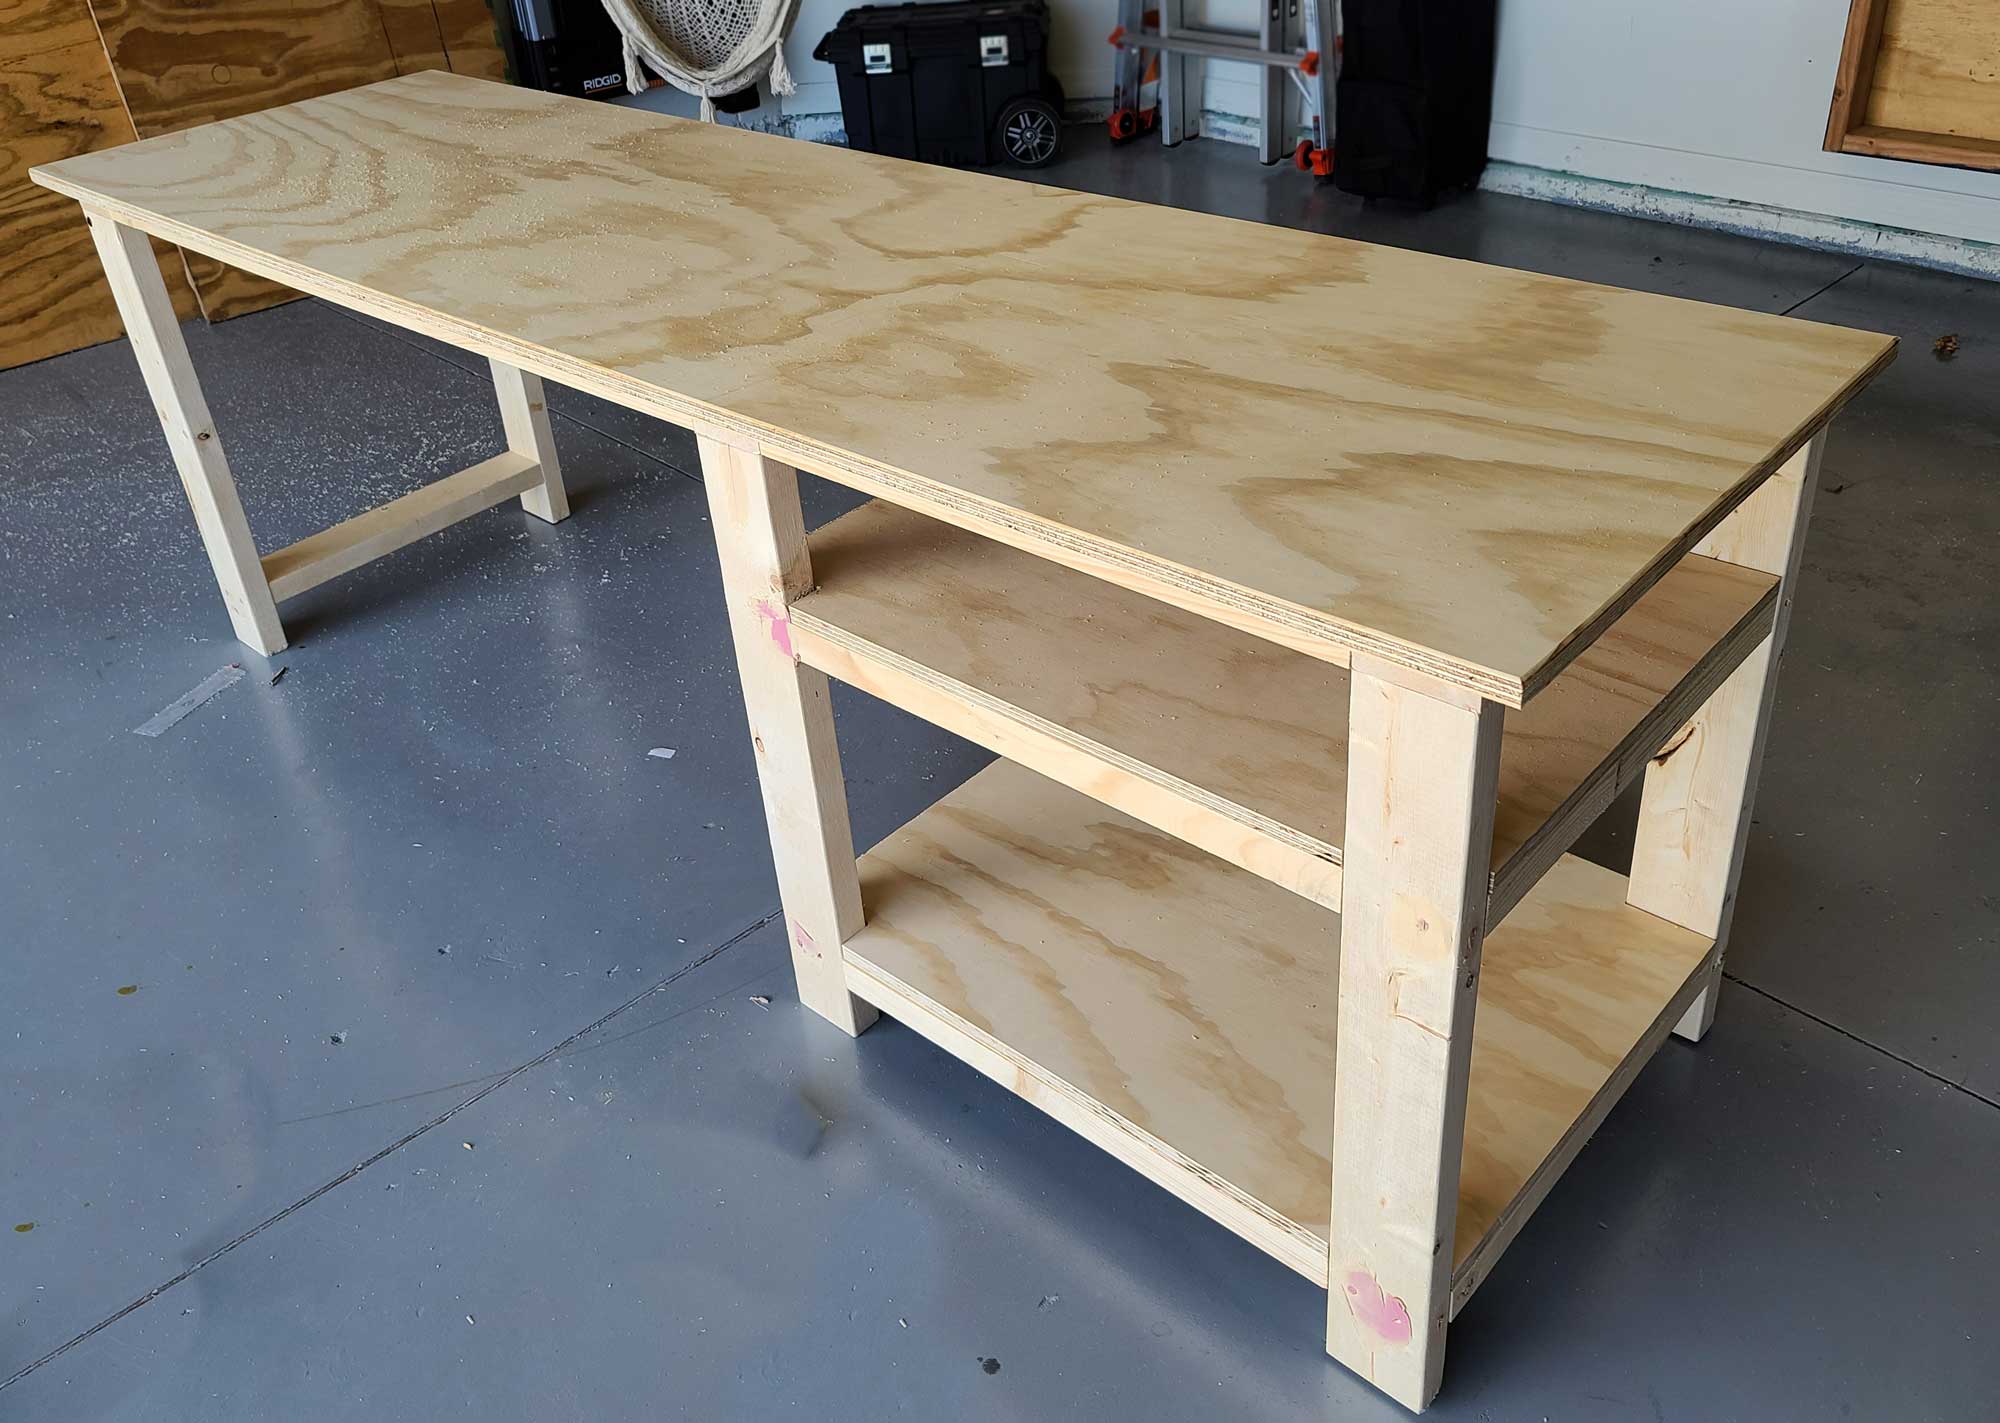  diy wood desk top